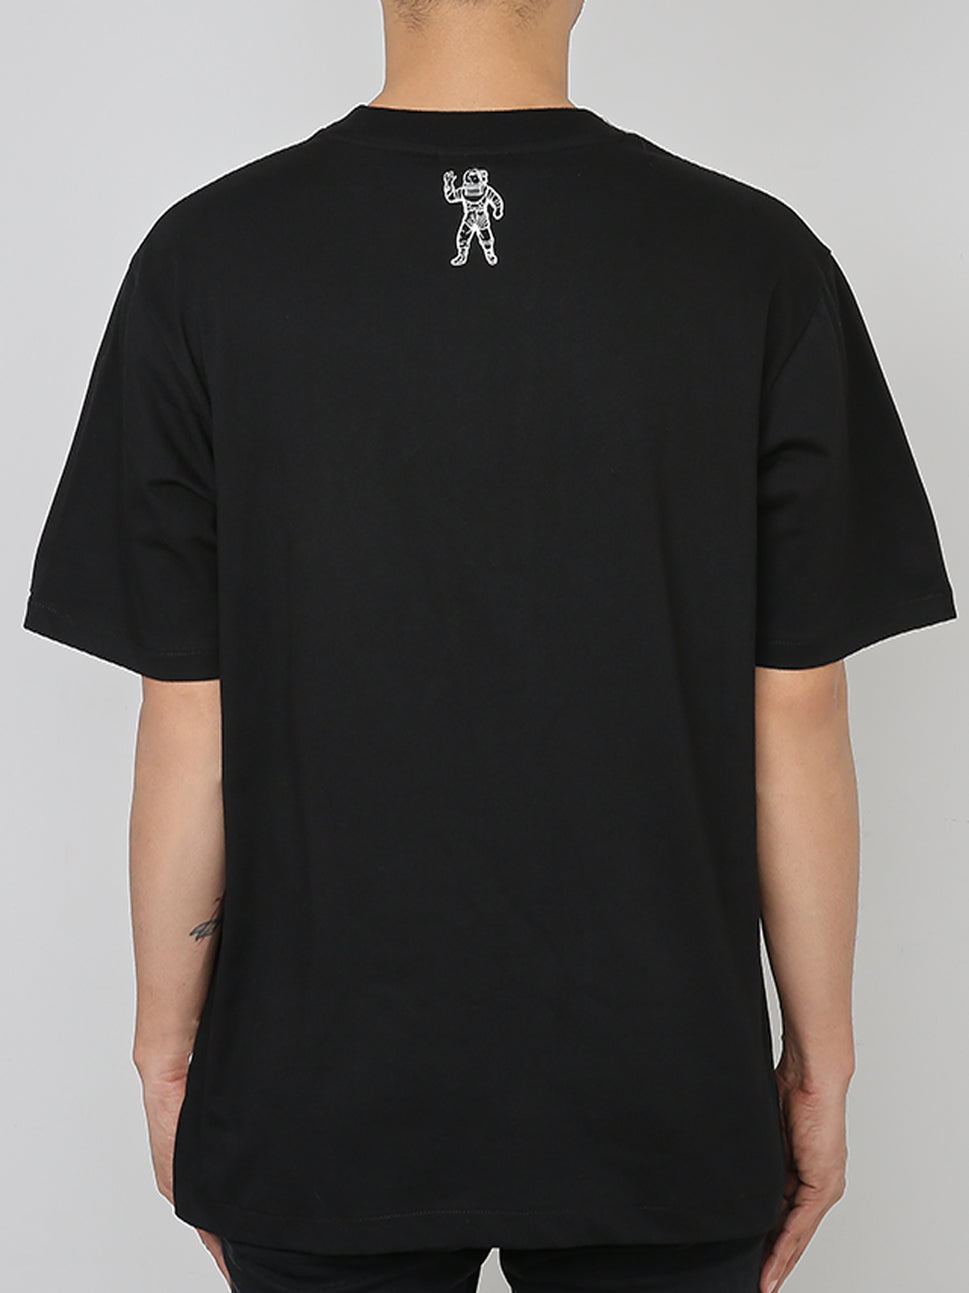 Billionaire Boys Club Geometric T Shirt Black